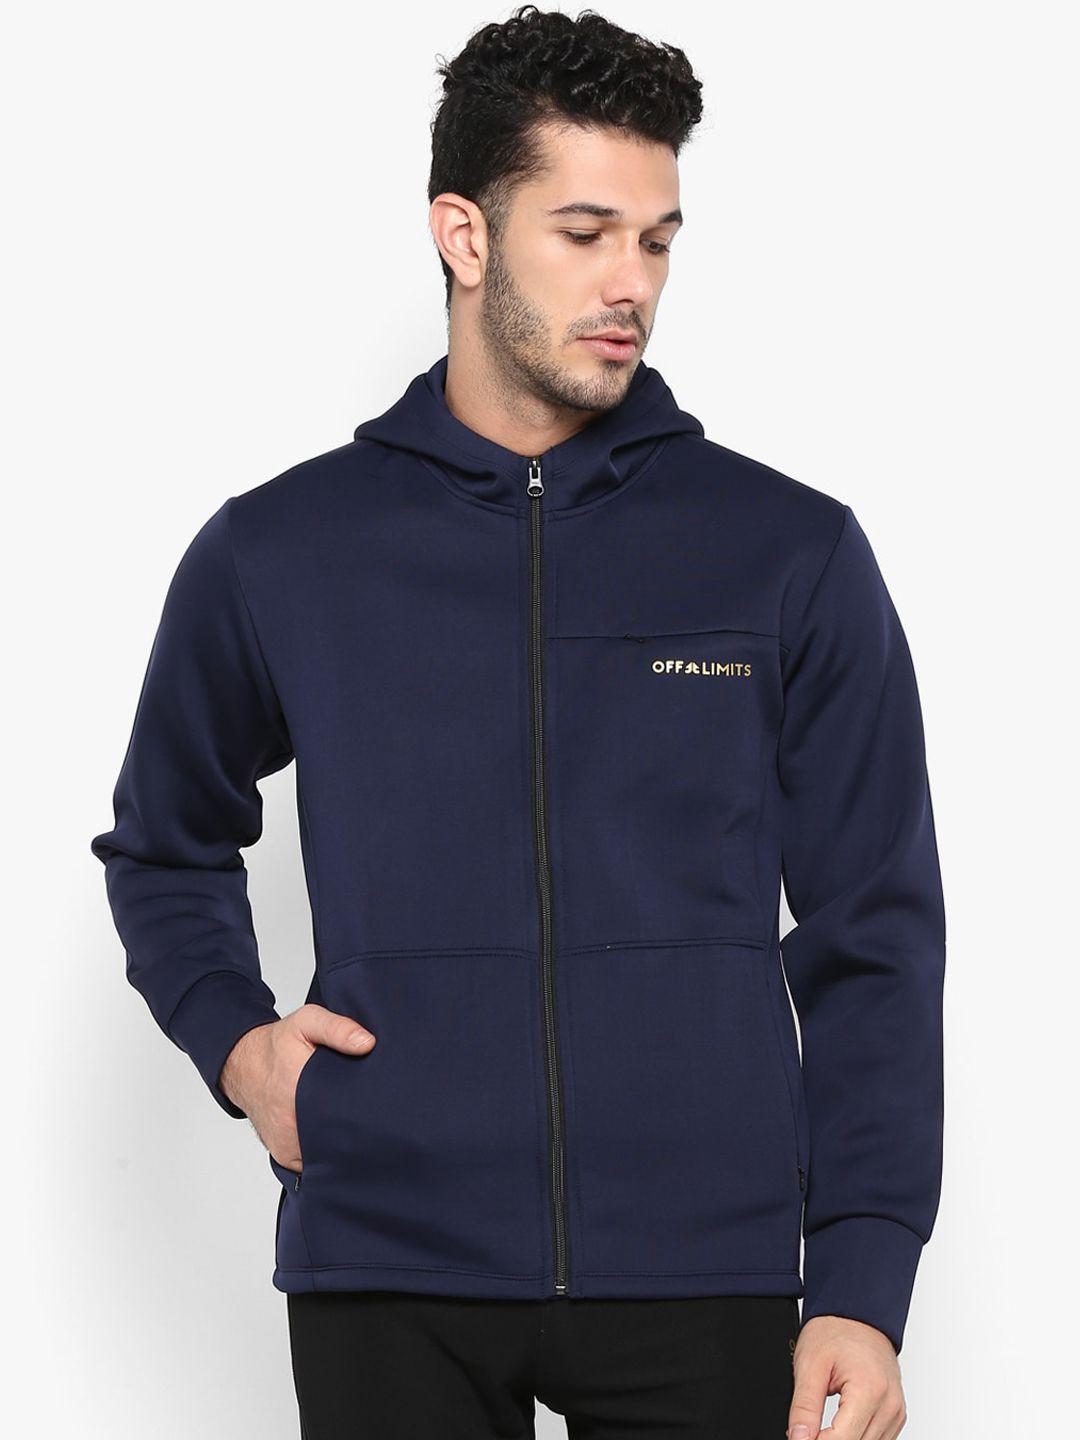 off-limits-men-navy-blue-solid-hooded-sweatshirt